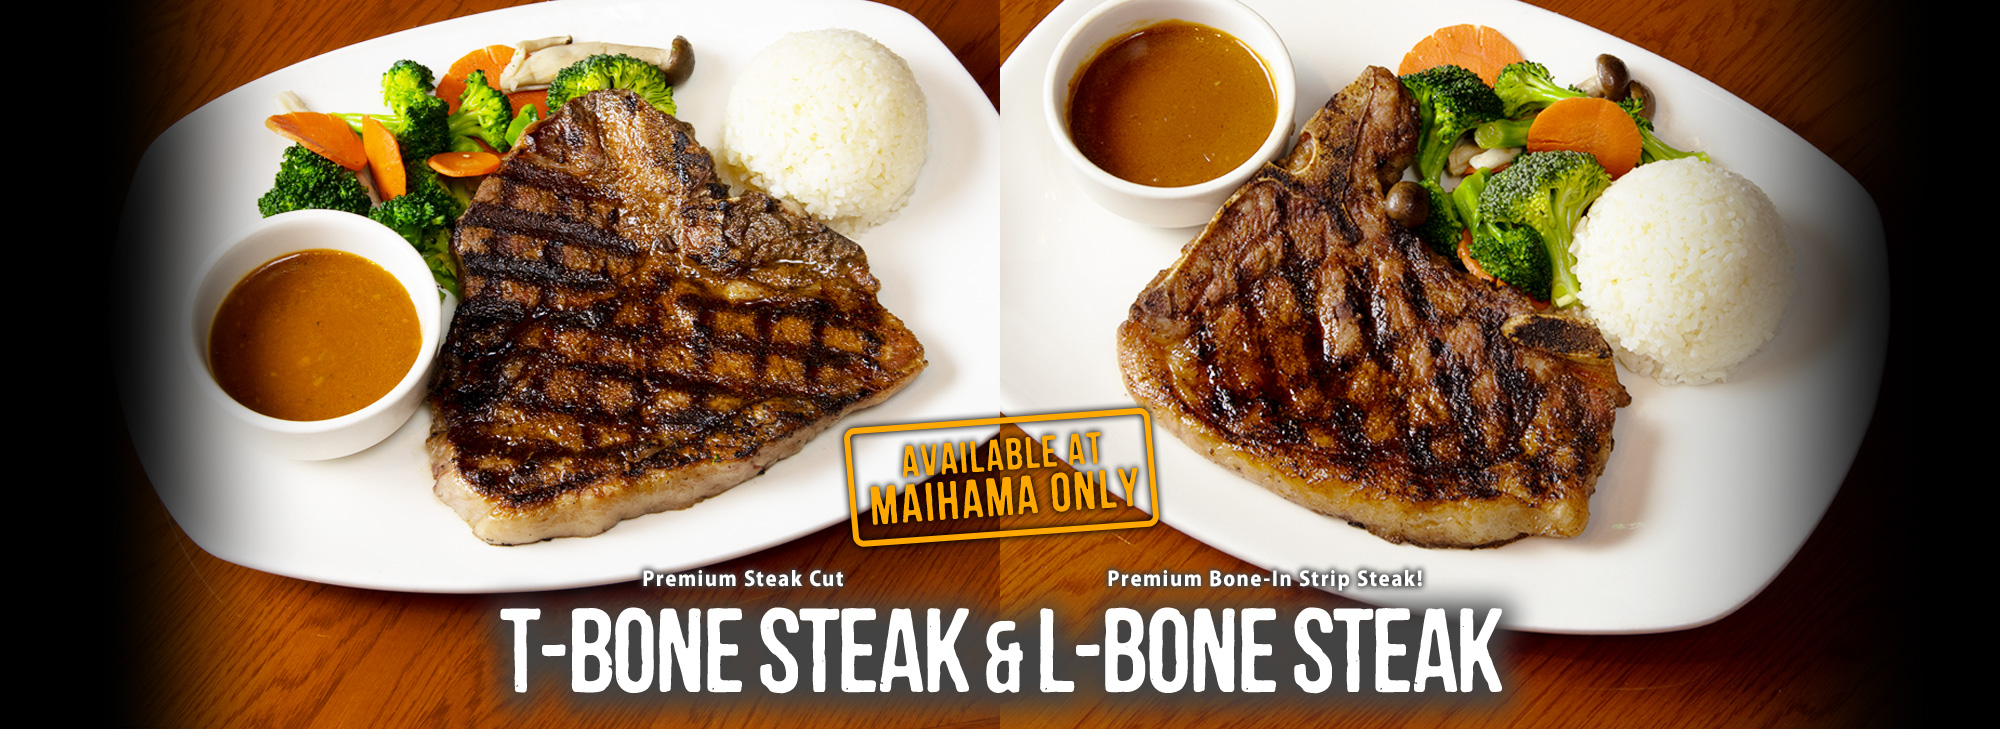 Available at MAIHAMA Only Premium Steak Cut Premium Bone-In Strip Steak!